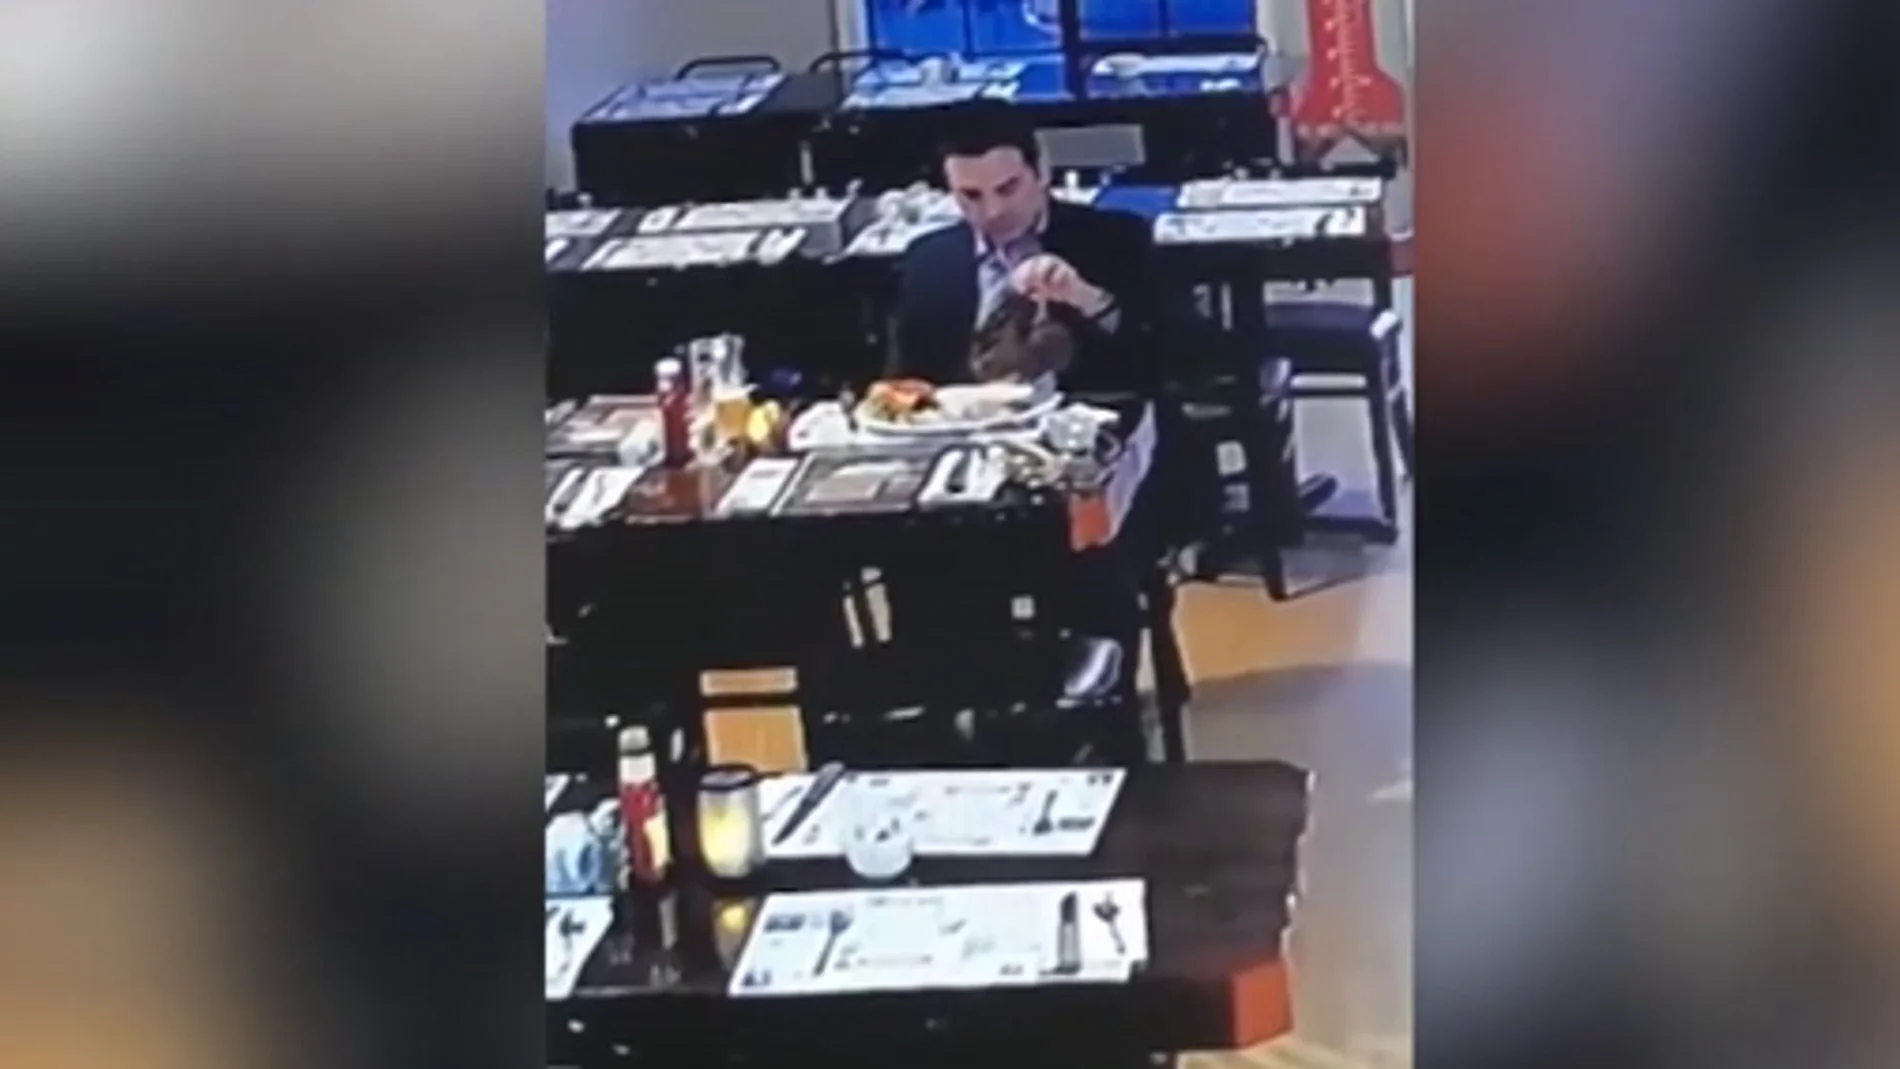 Graban a un hombre robando un chuletón y huyendo de un restaurante sin pagar